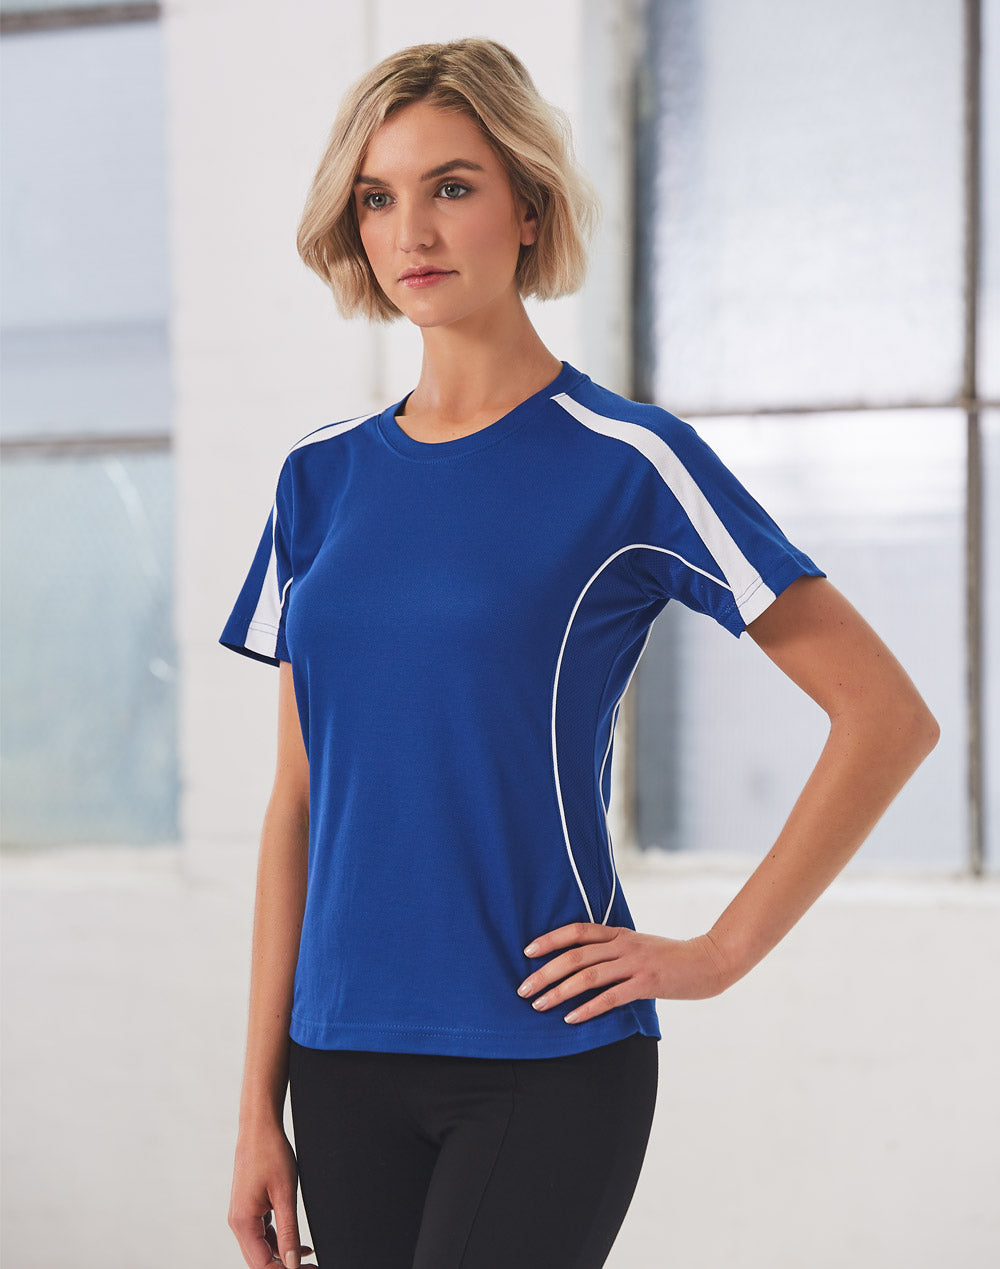 Winning Spirit Ladies' Truedry Short Sleeve Fashion Tee Shirt (TS54) 2nd color